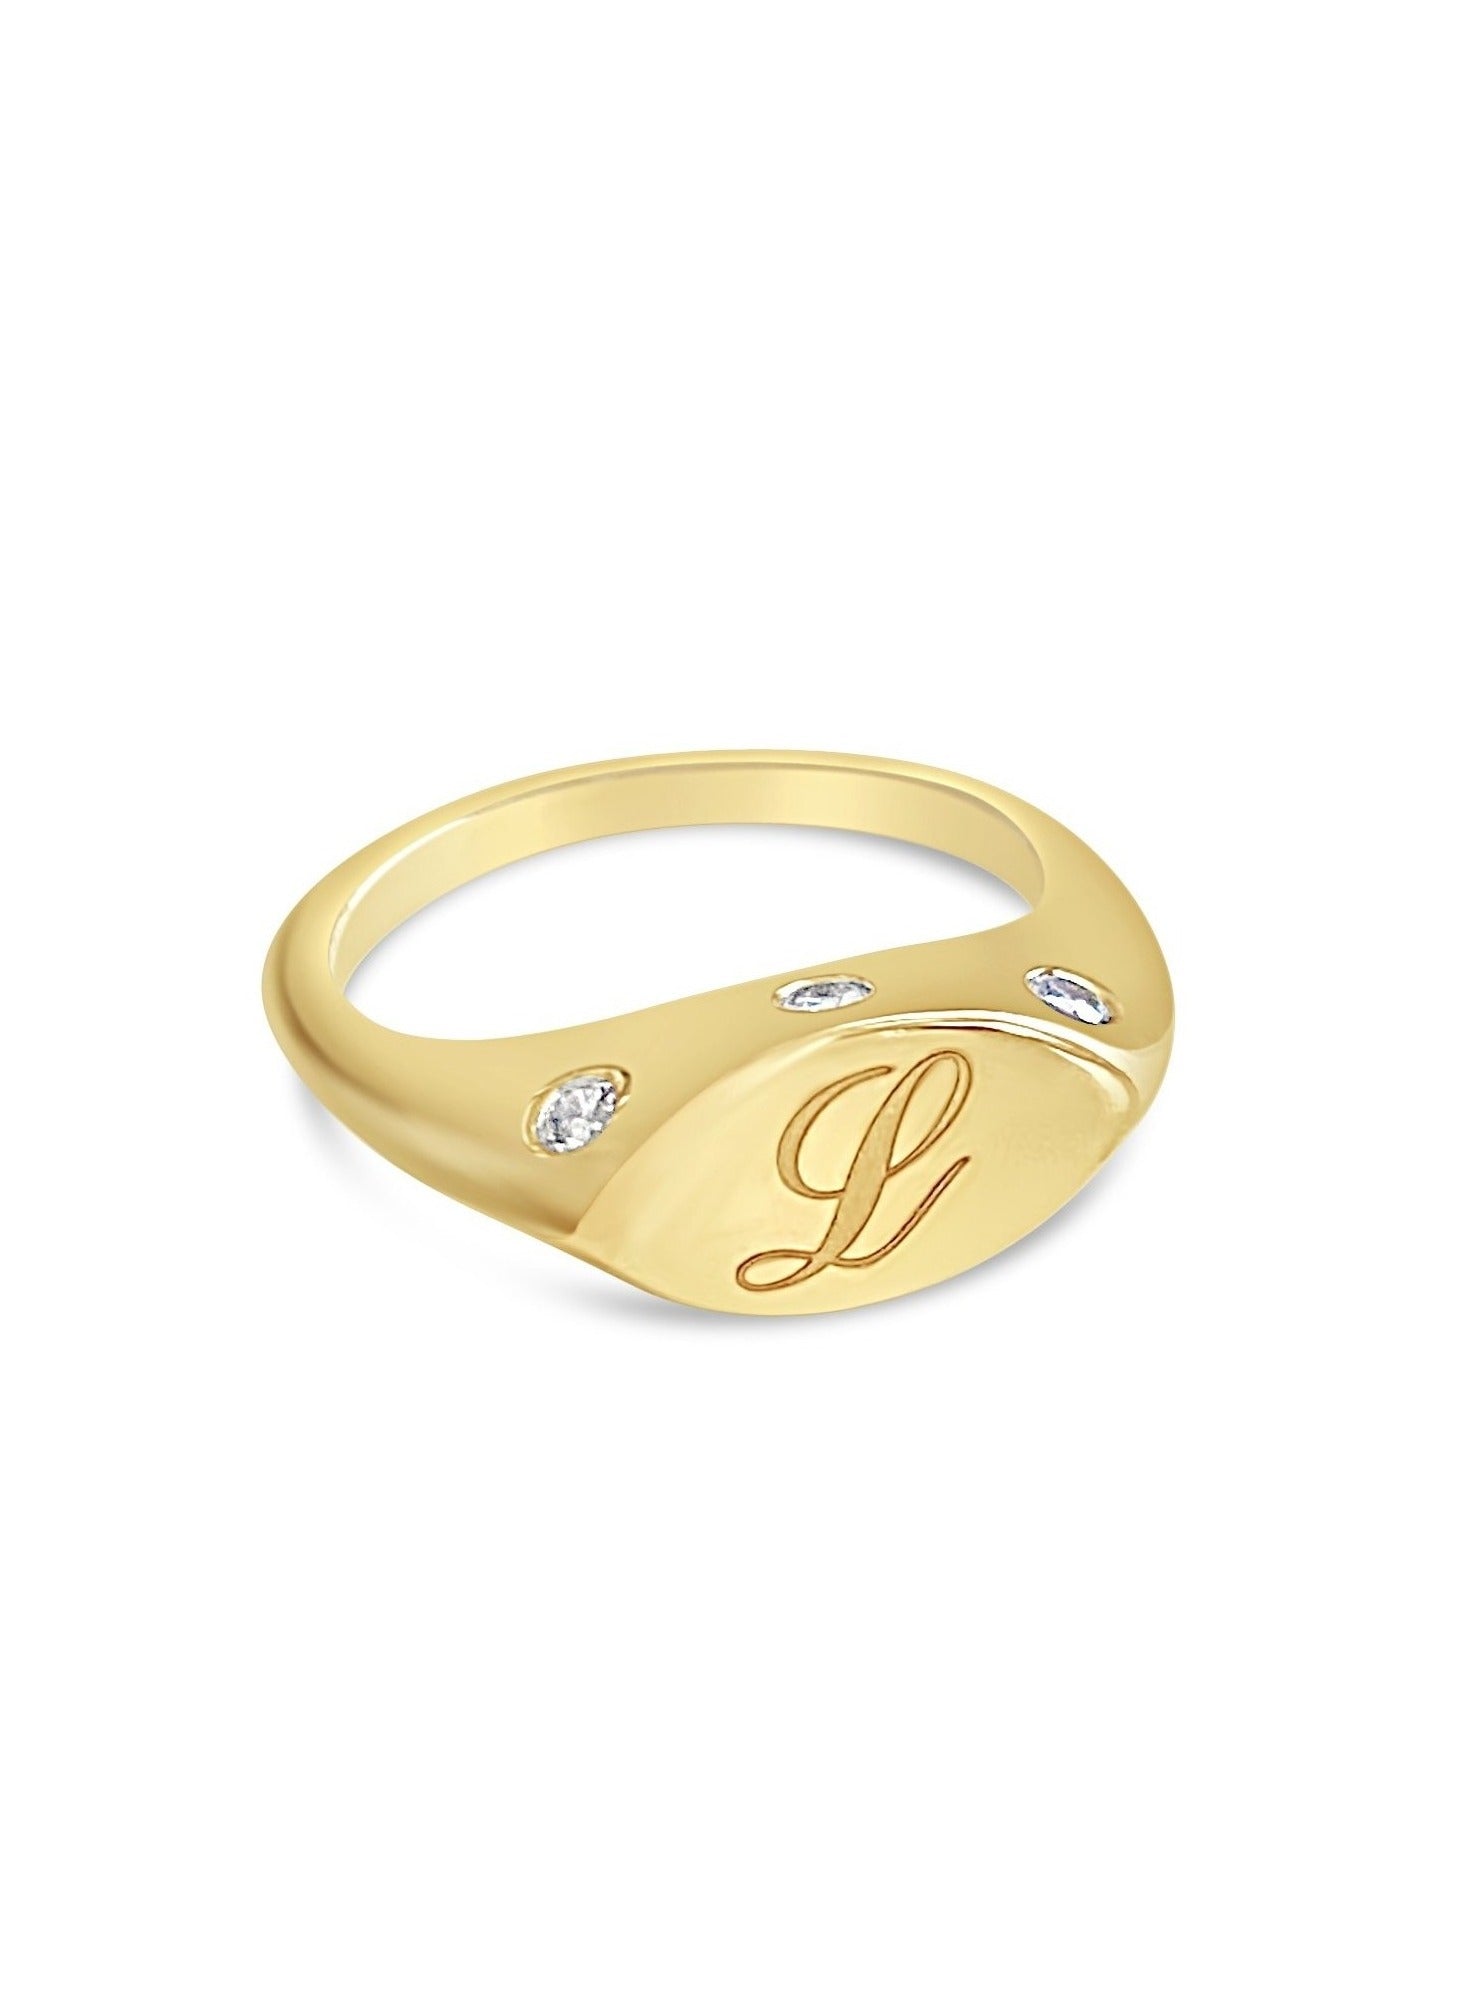 Jacqueline Signet Ring in 10K Solid Gold